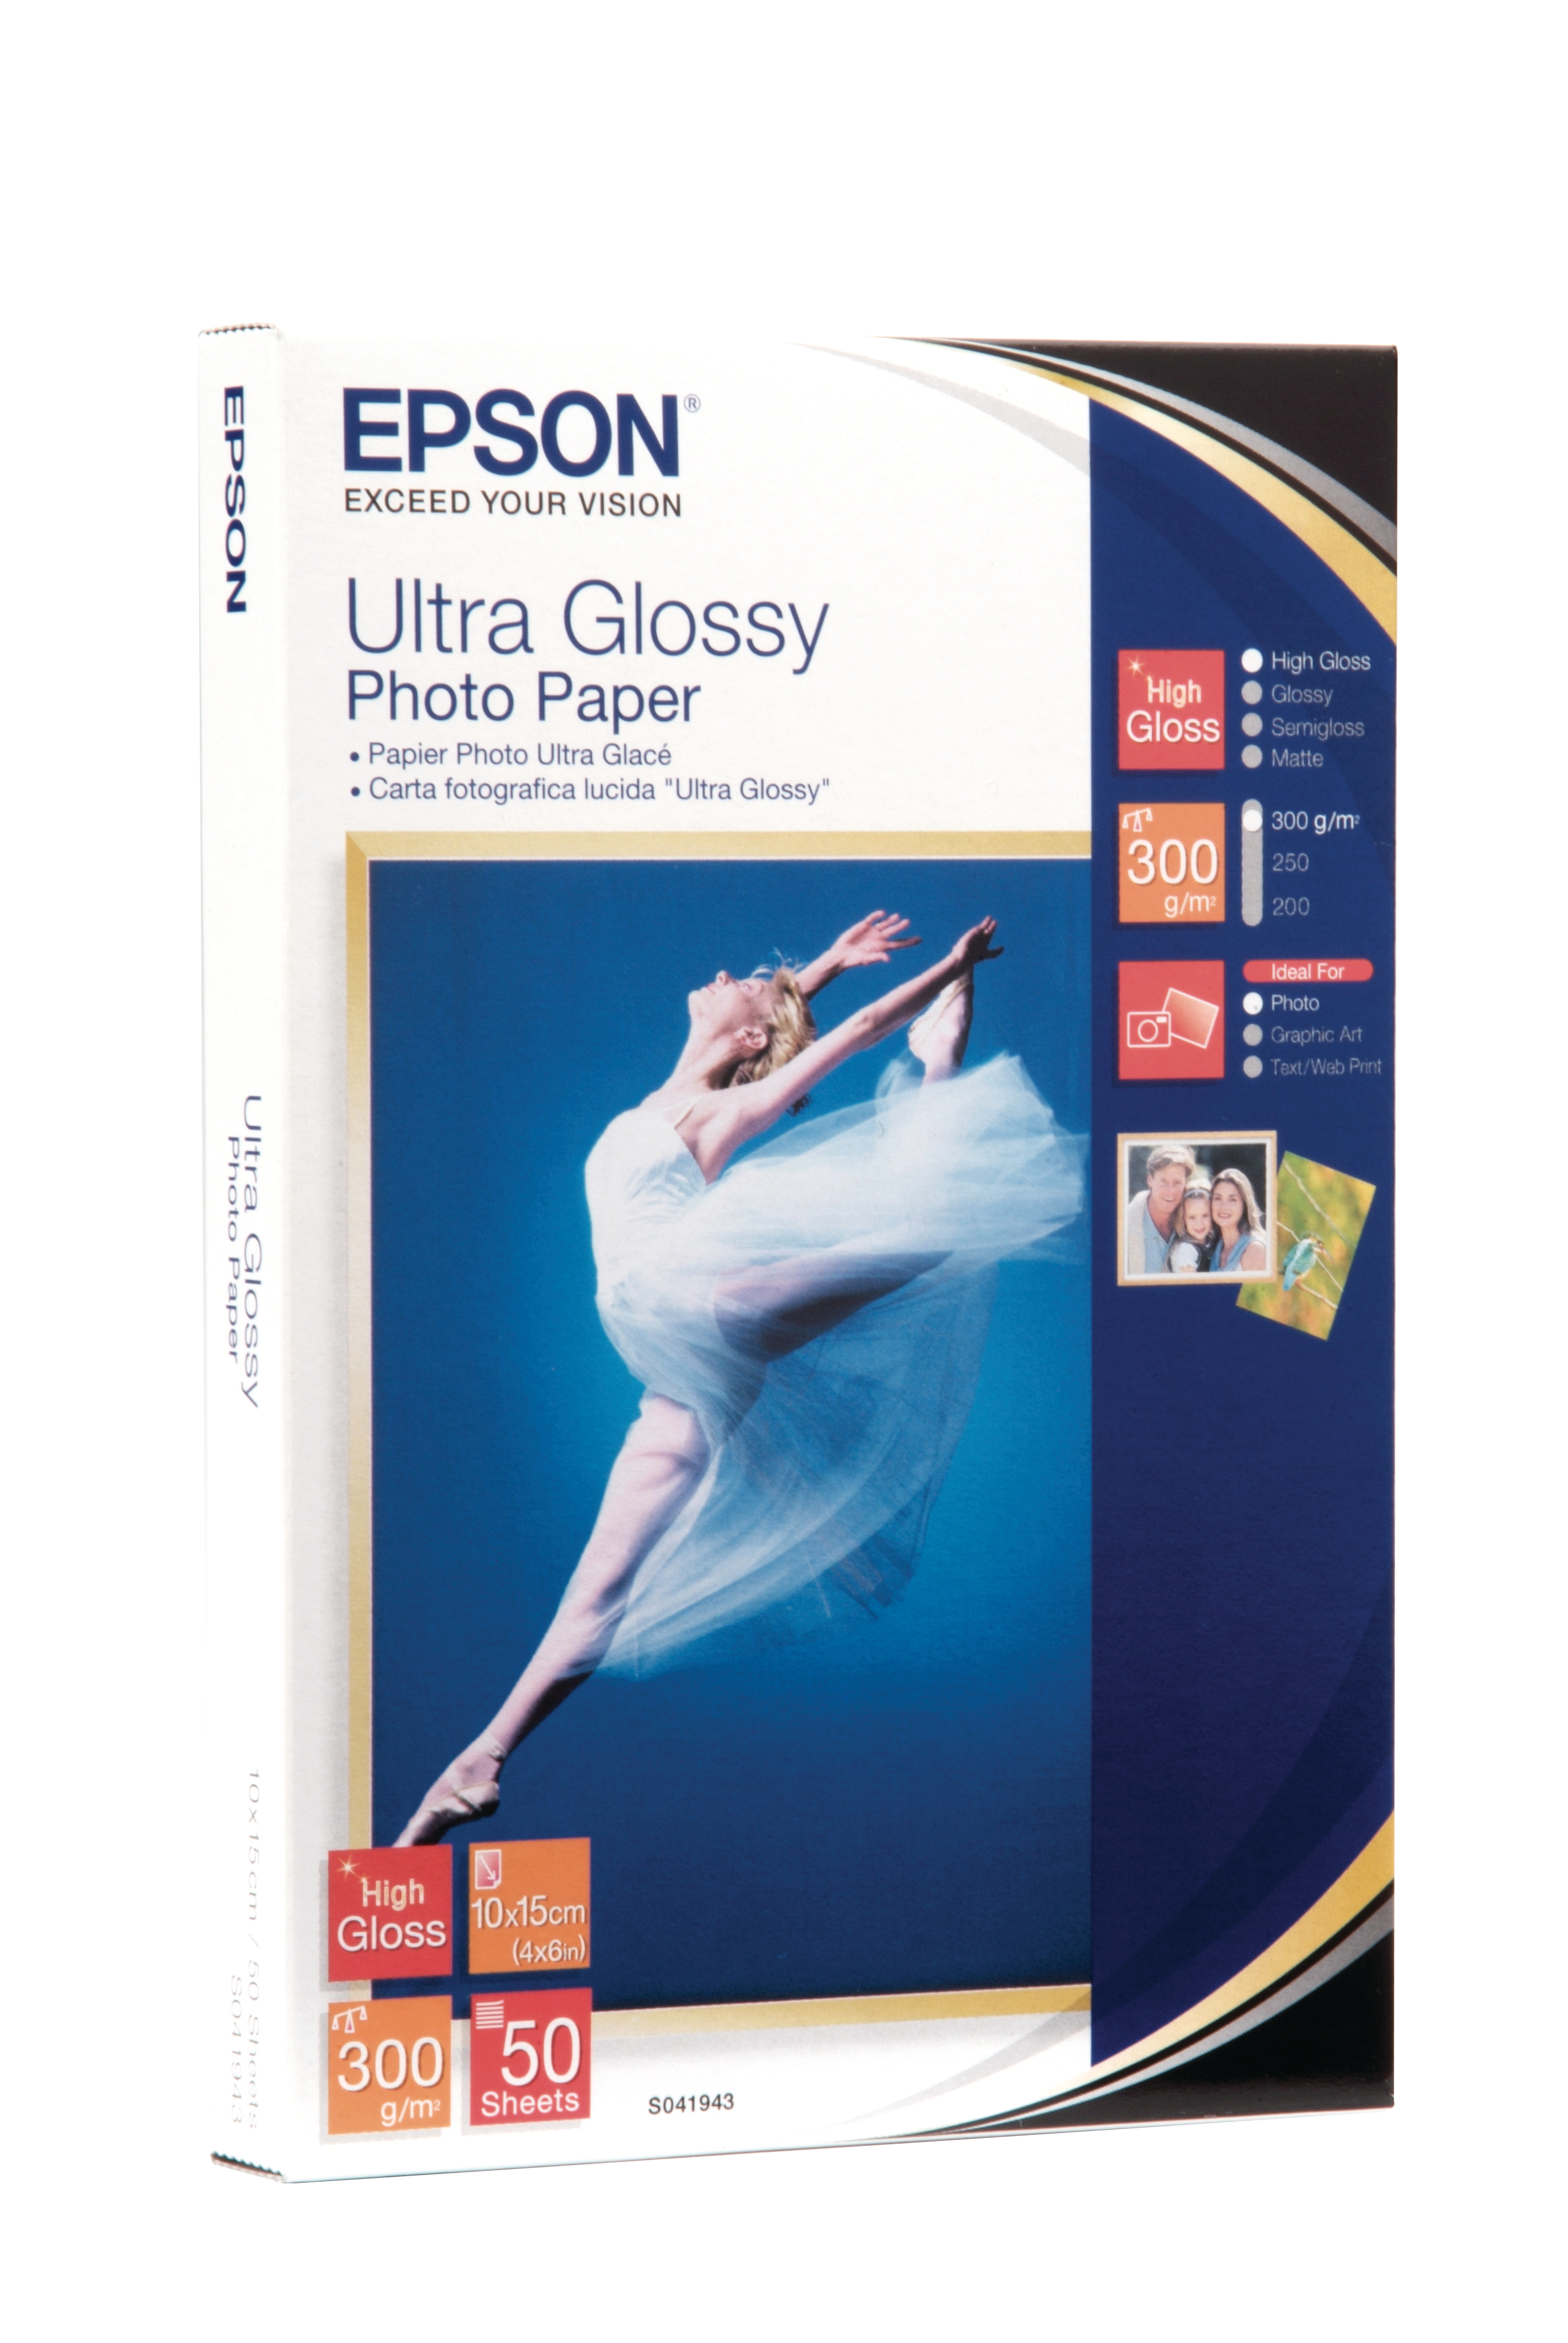 EPSON Ultra Glossy Photo 10x15cm S041943 Stylus DX 3800 300g 50 flls. Stylus DX 3800 300g 50 flls.